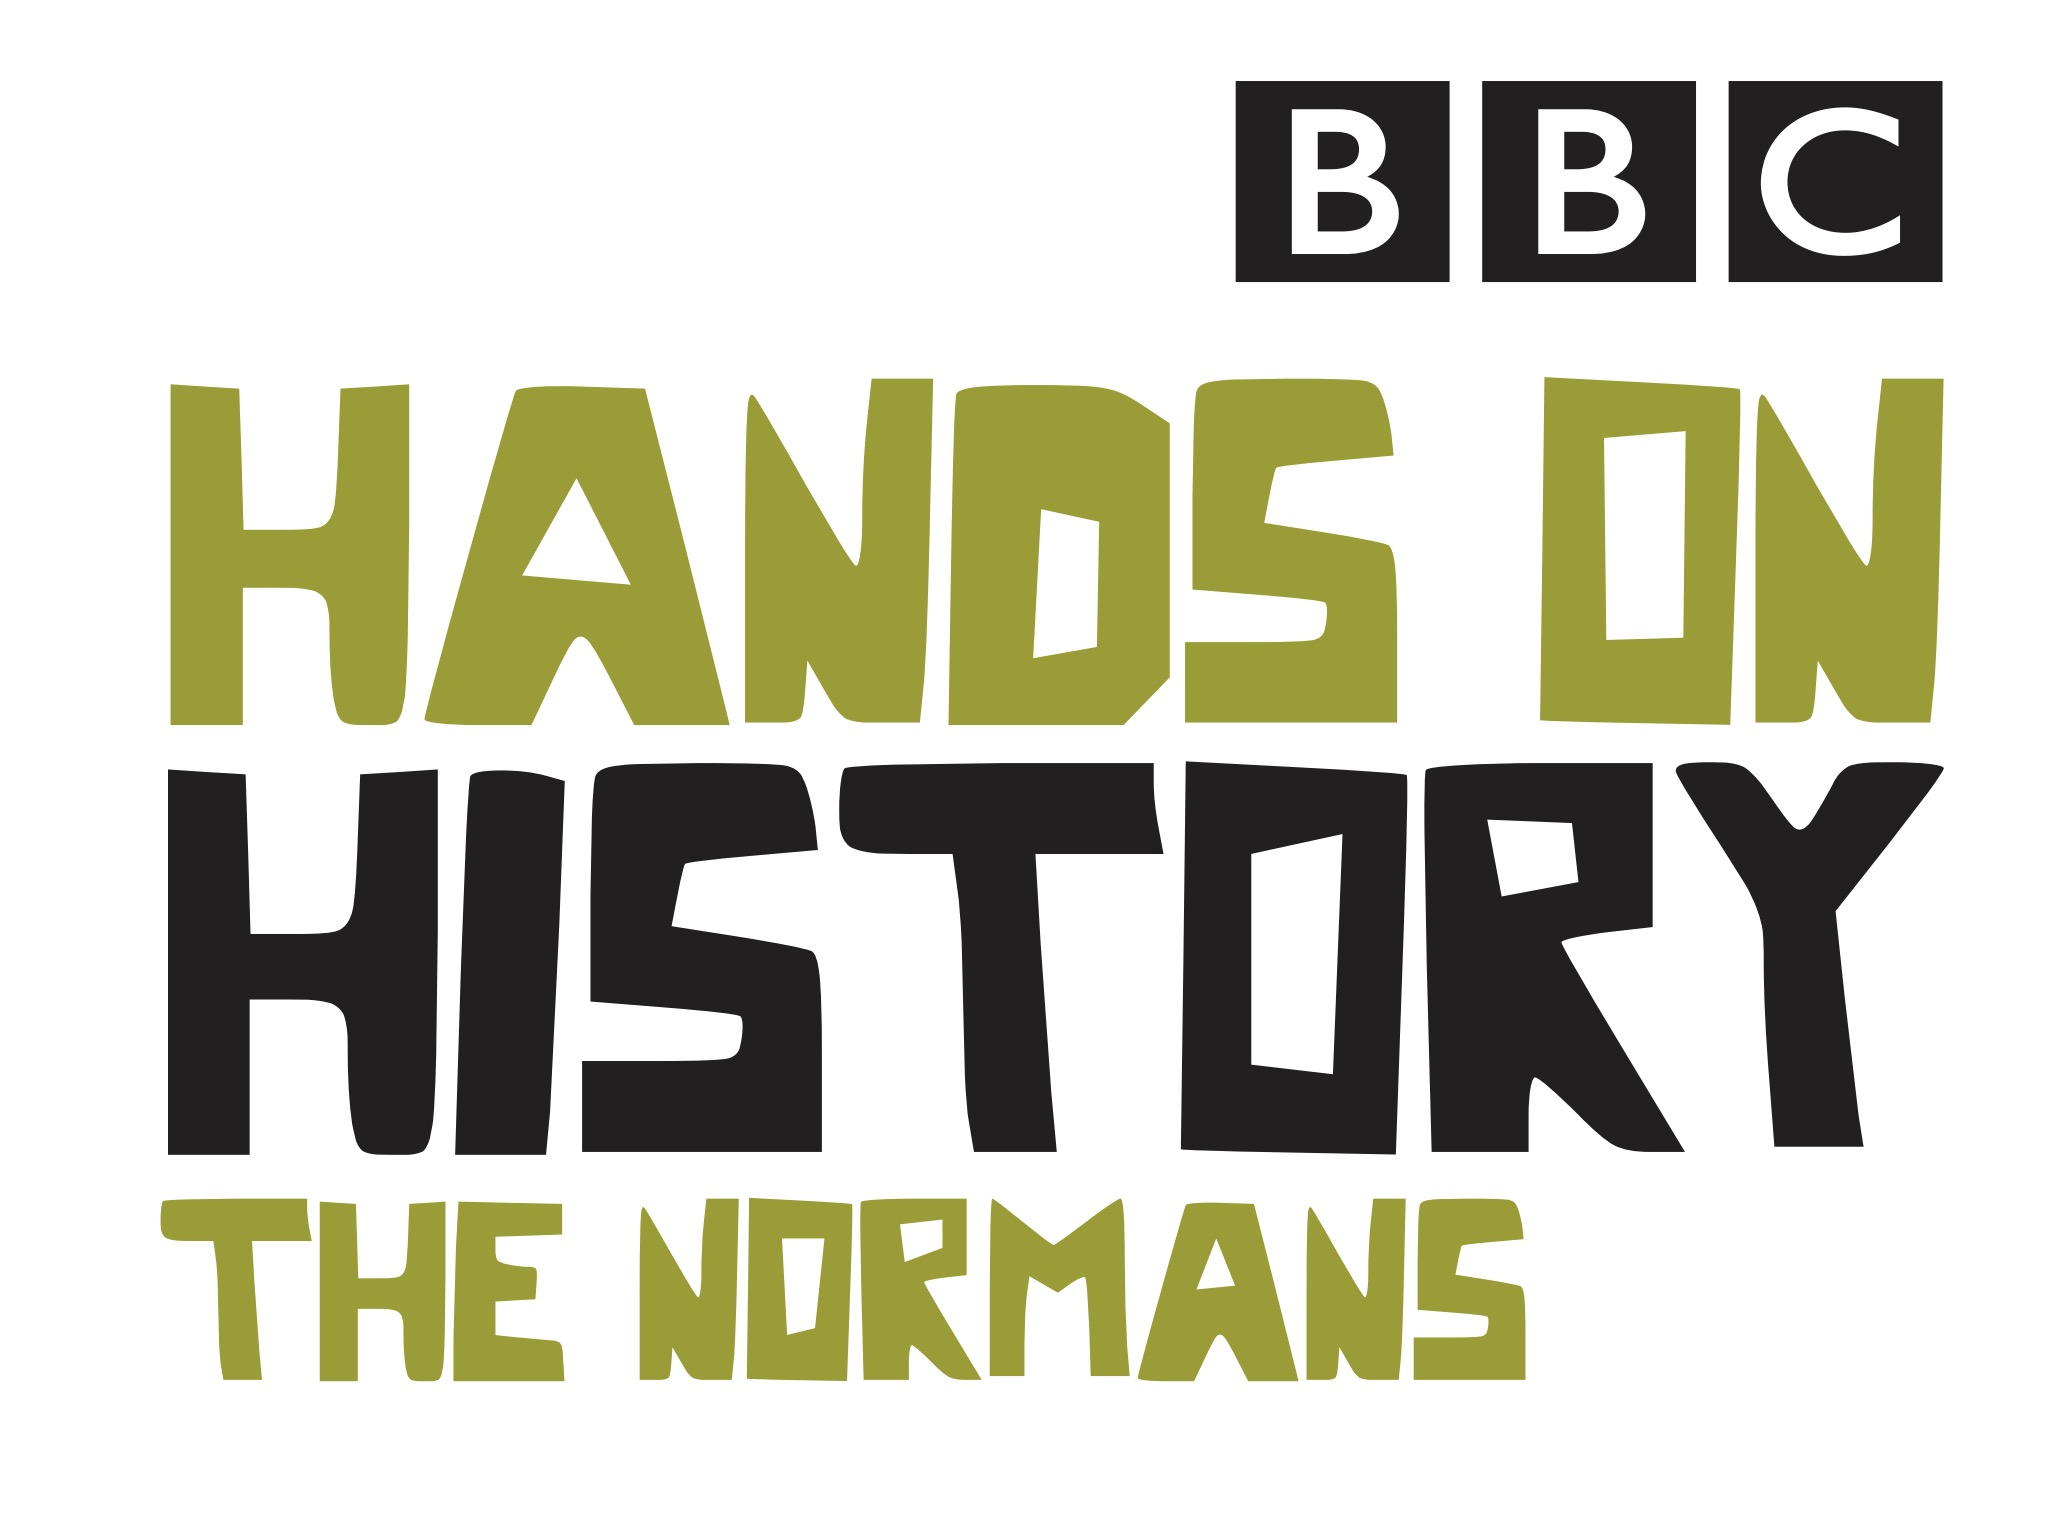 BBC hands on history logo - Comic Dandy font